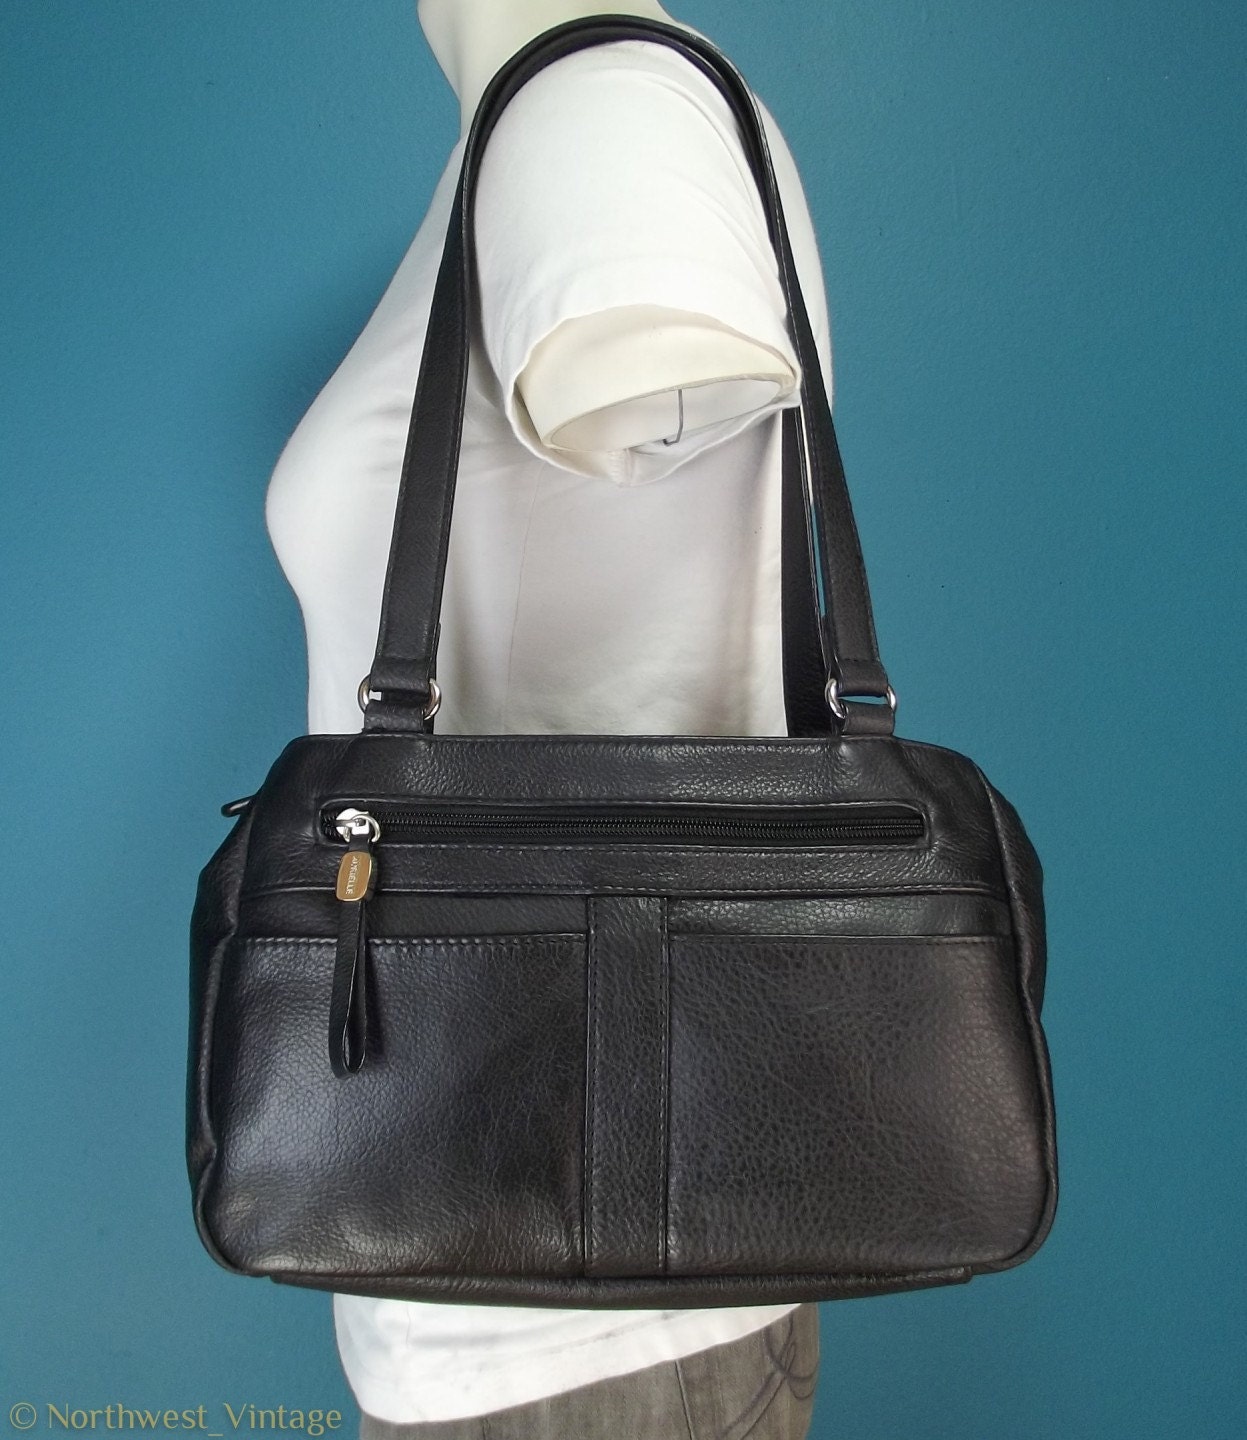 Items similar to Aurielle Black Leather Shoulder Bag Handbag Purse on Etsy